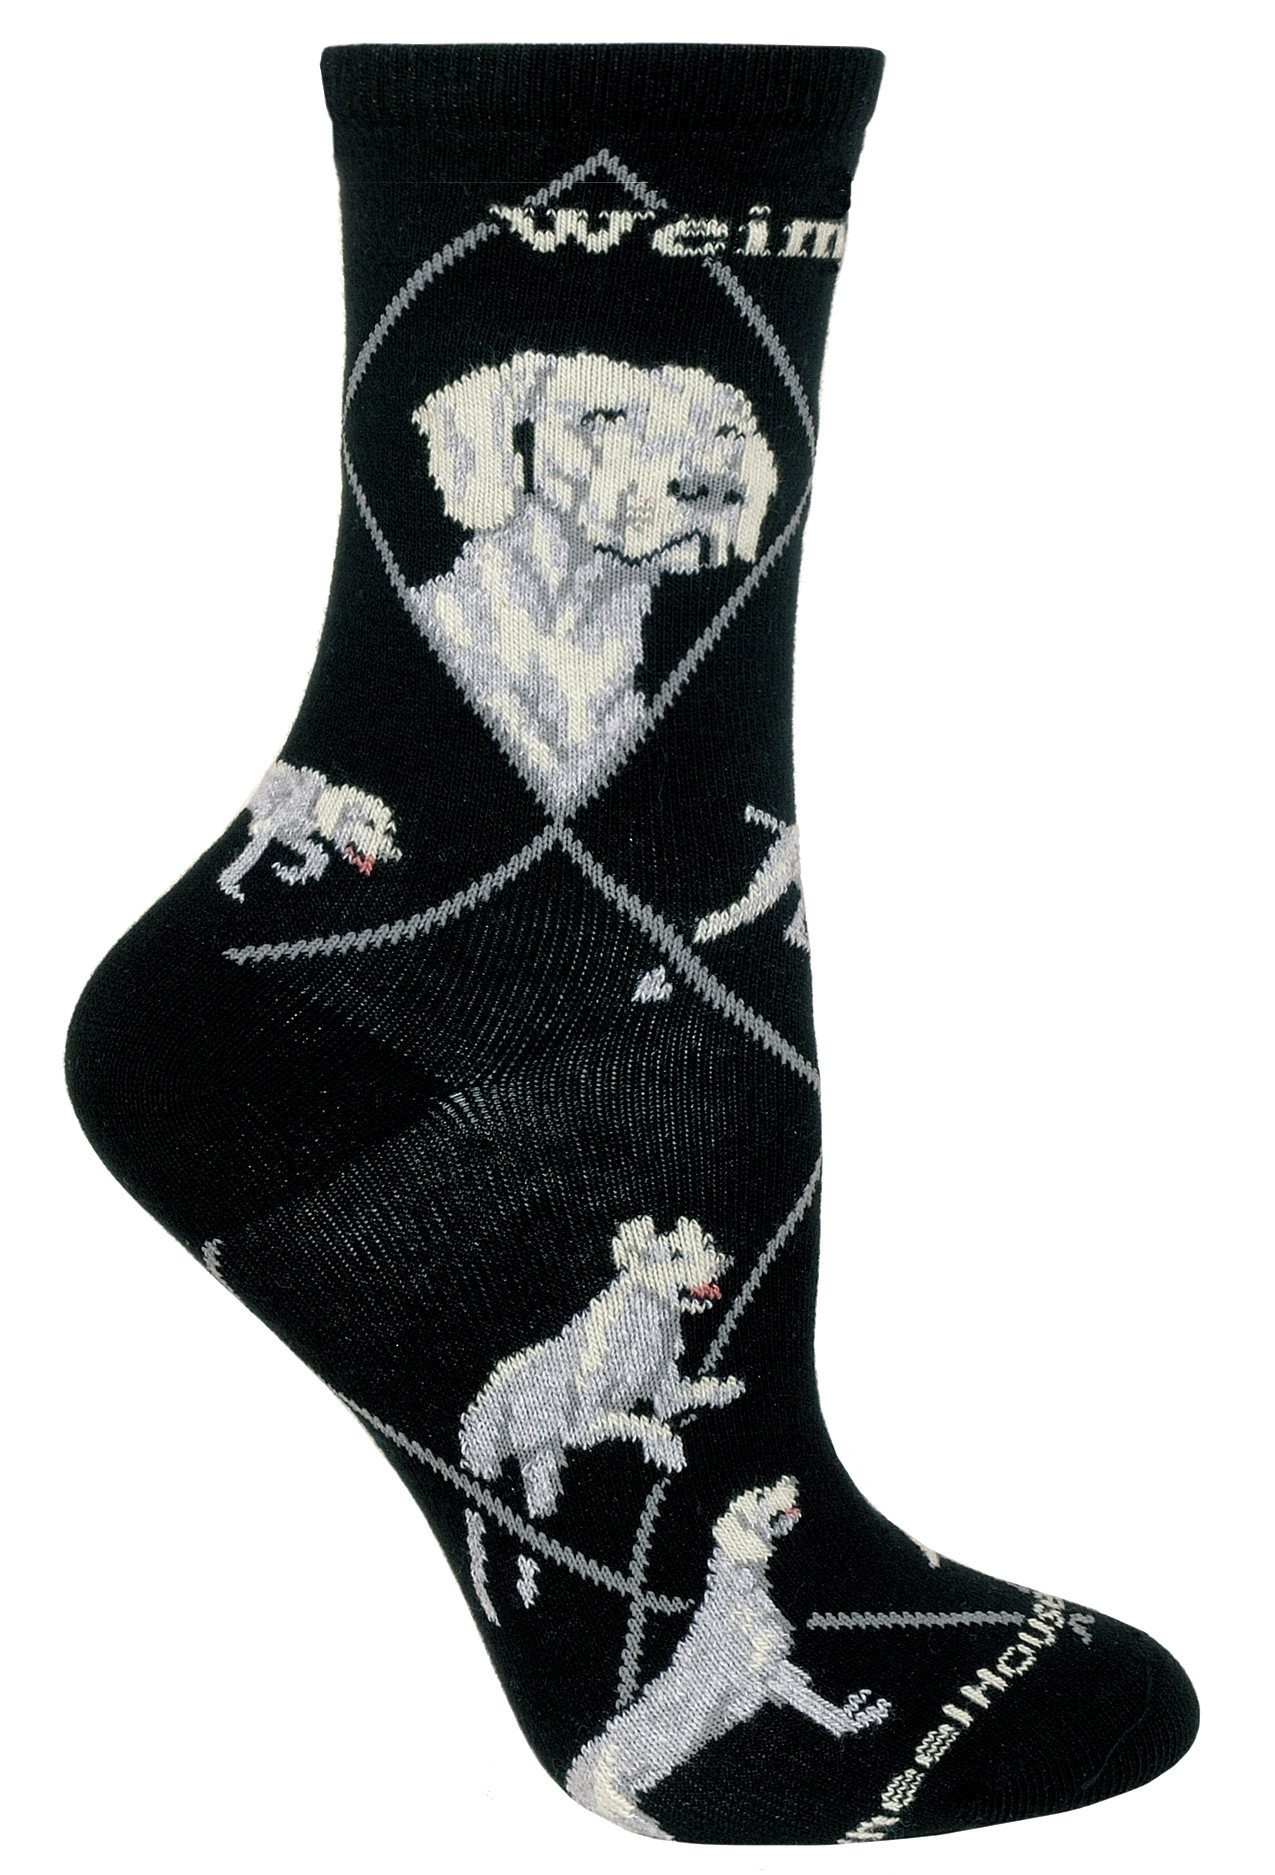 Weimaraner Sock on Black Size 10-13